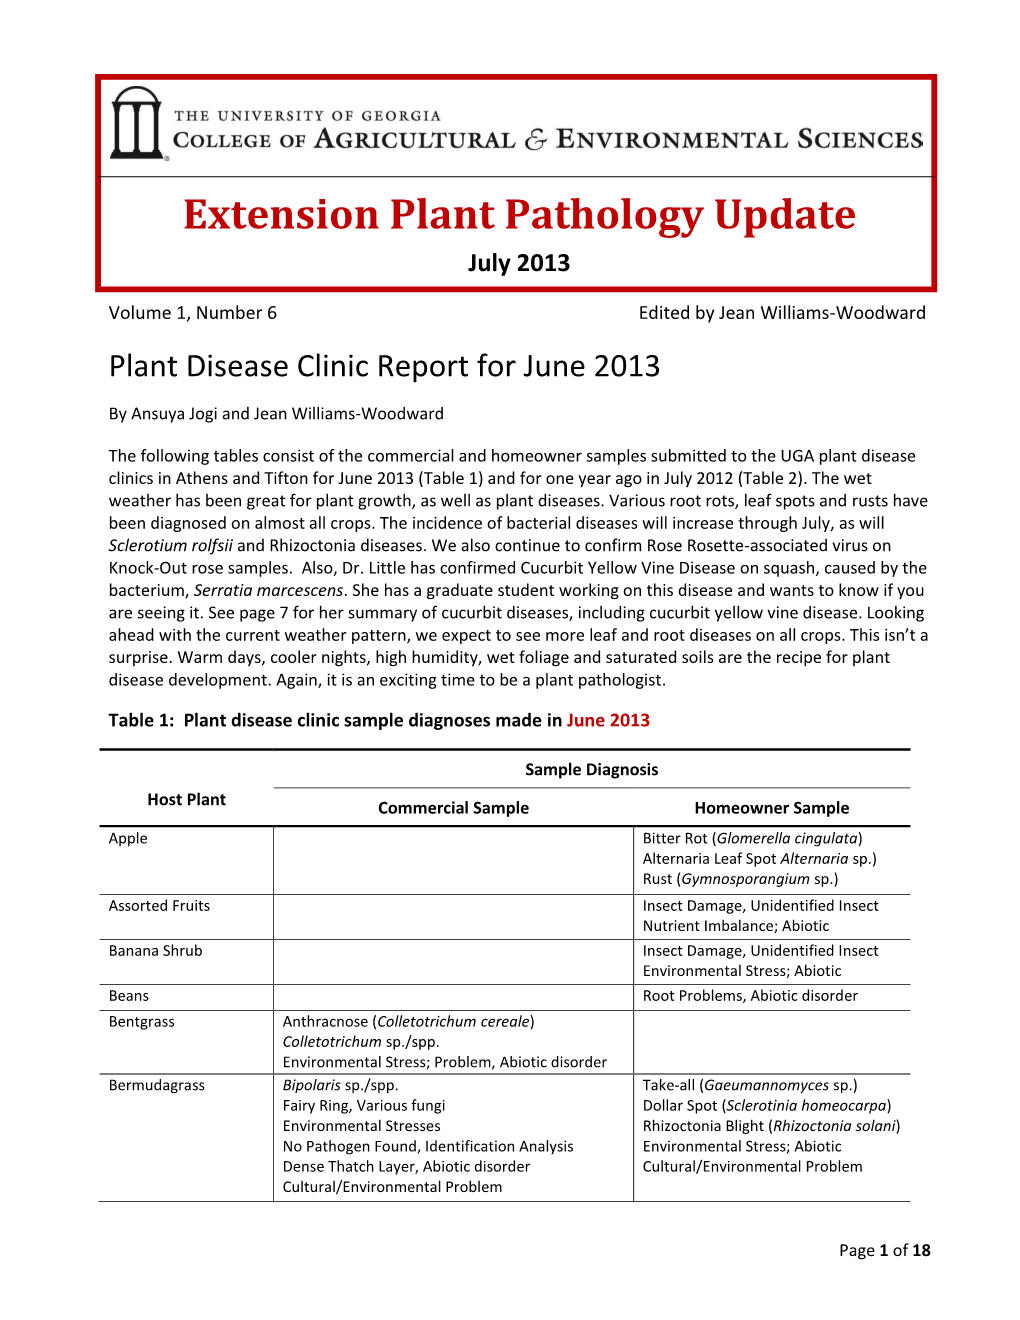 Extension Plant Pathology Update July 2013